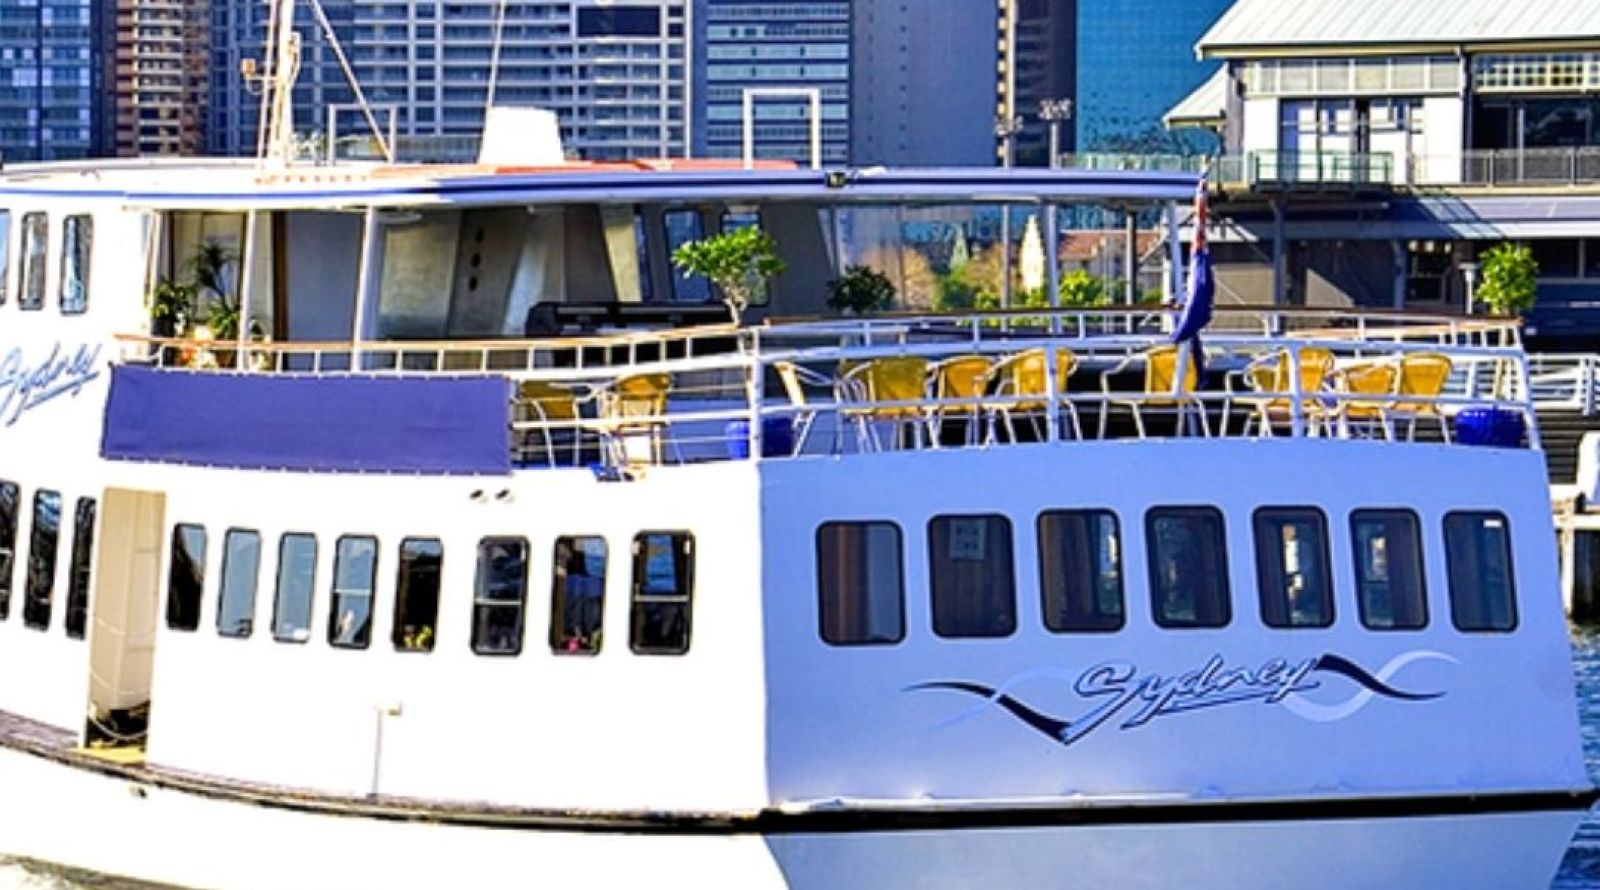 MV Sydney Boat Hire - Rear view